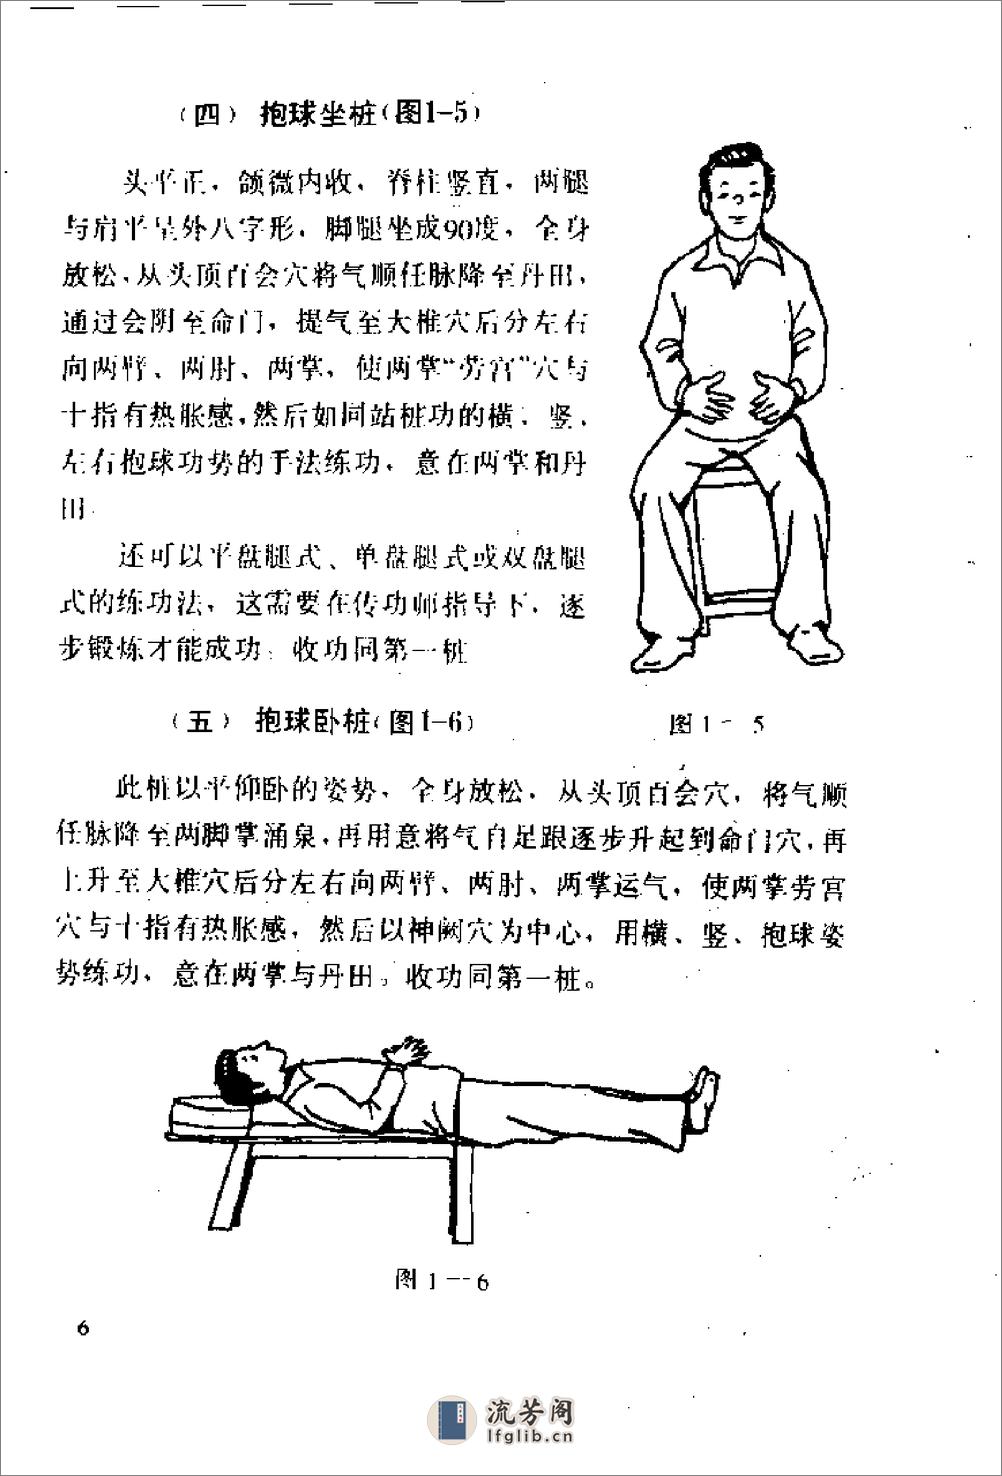 QM98内气外放功(1) - 第15页预览图